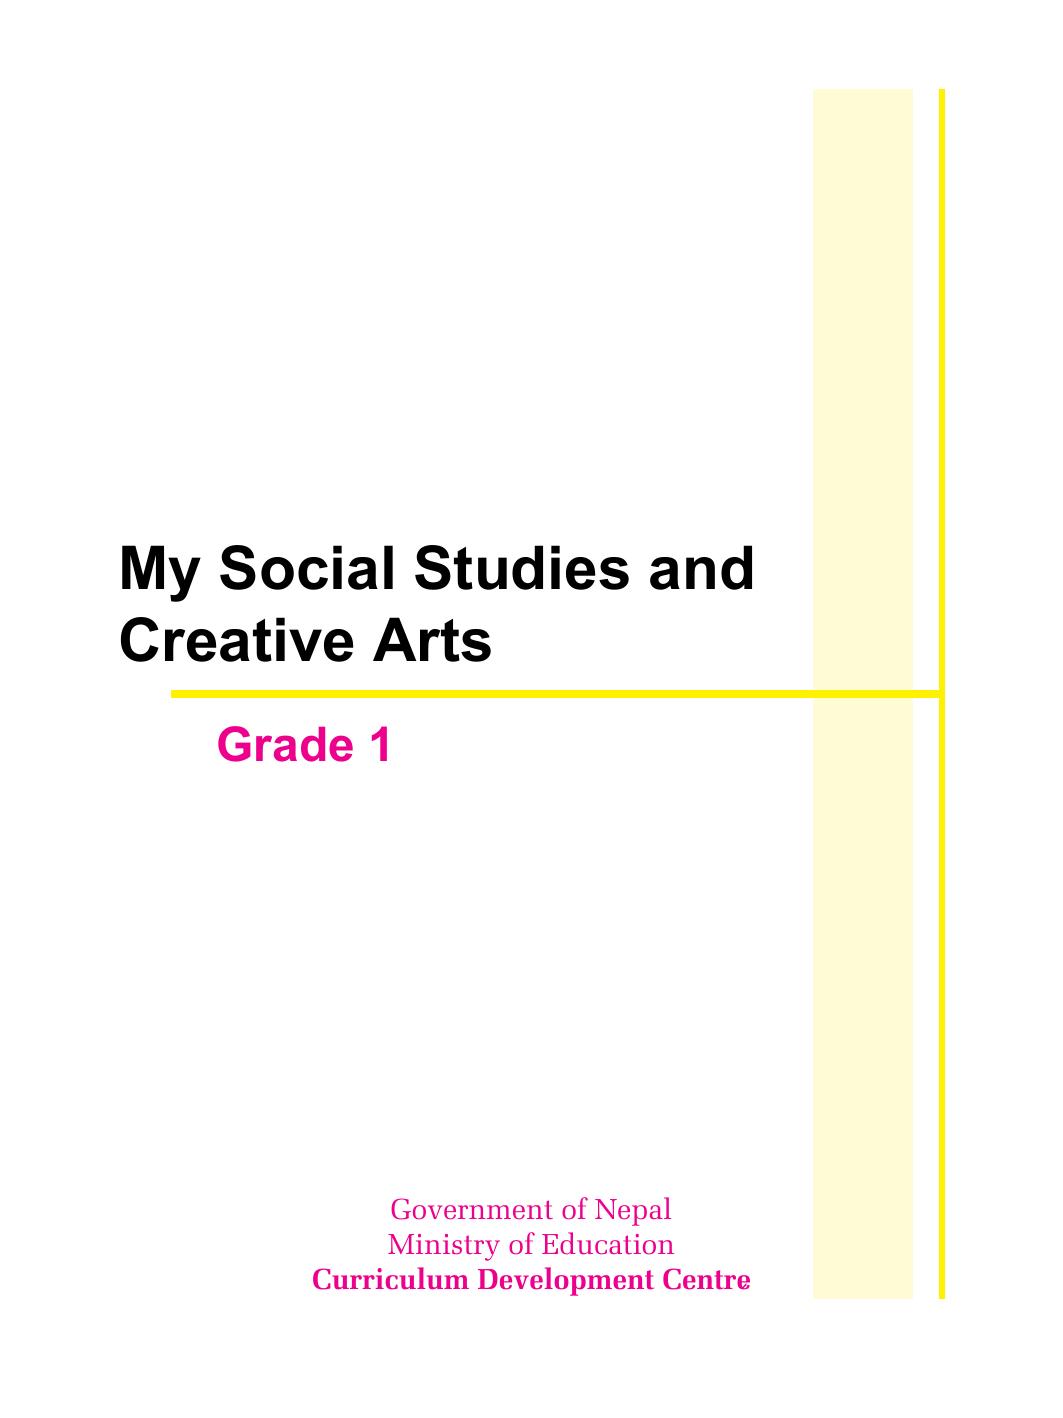 CDC 2018 - My Social Studies and Creative Arts Grade 1